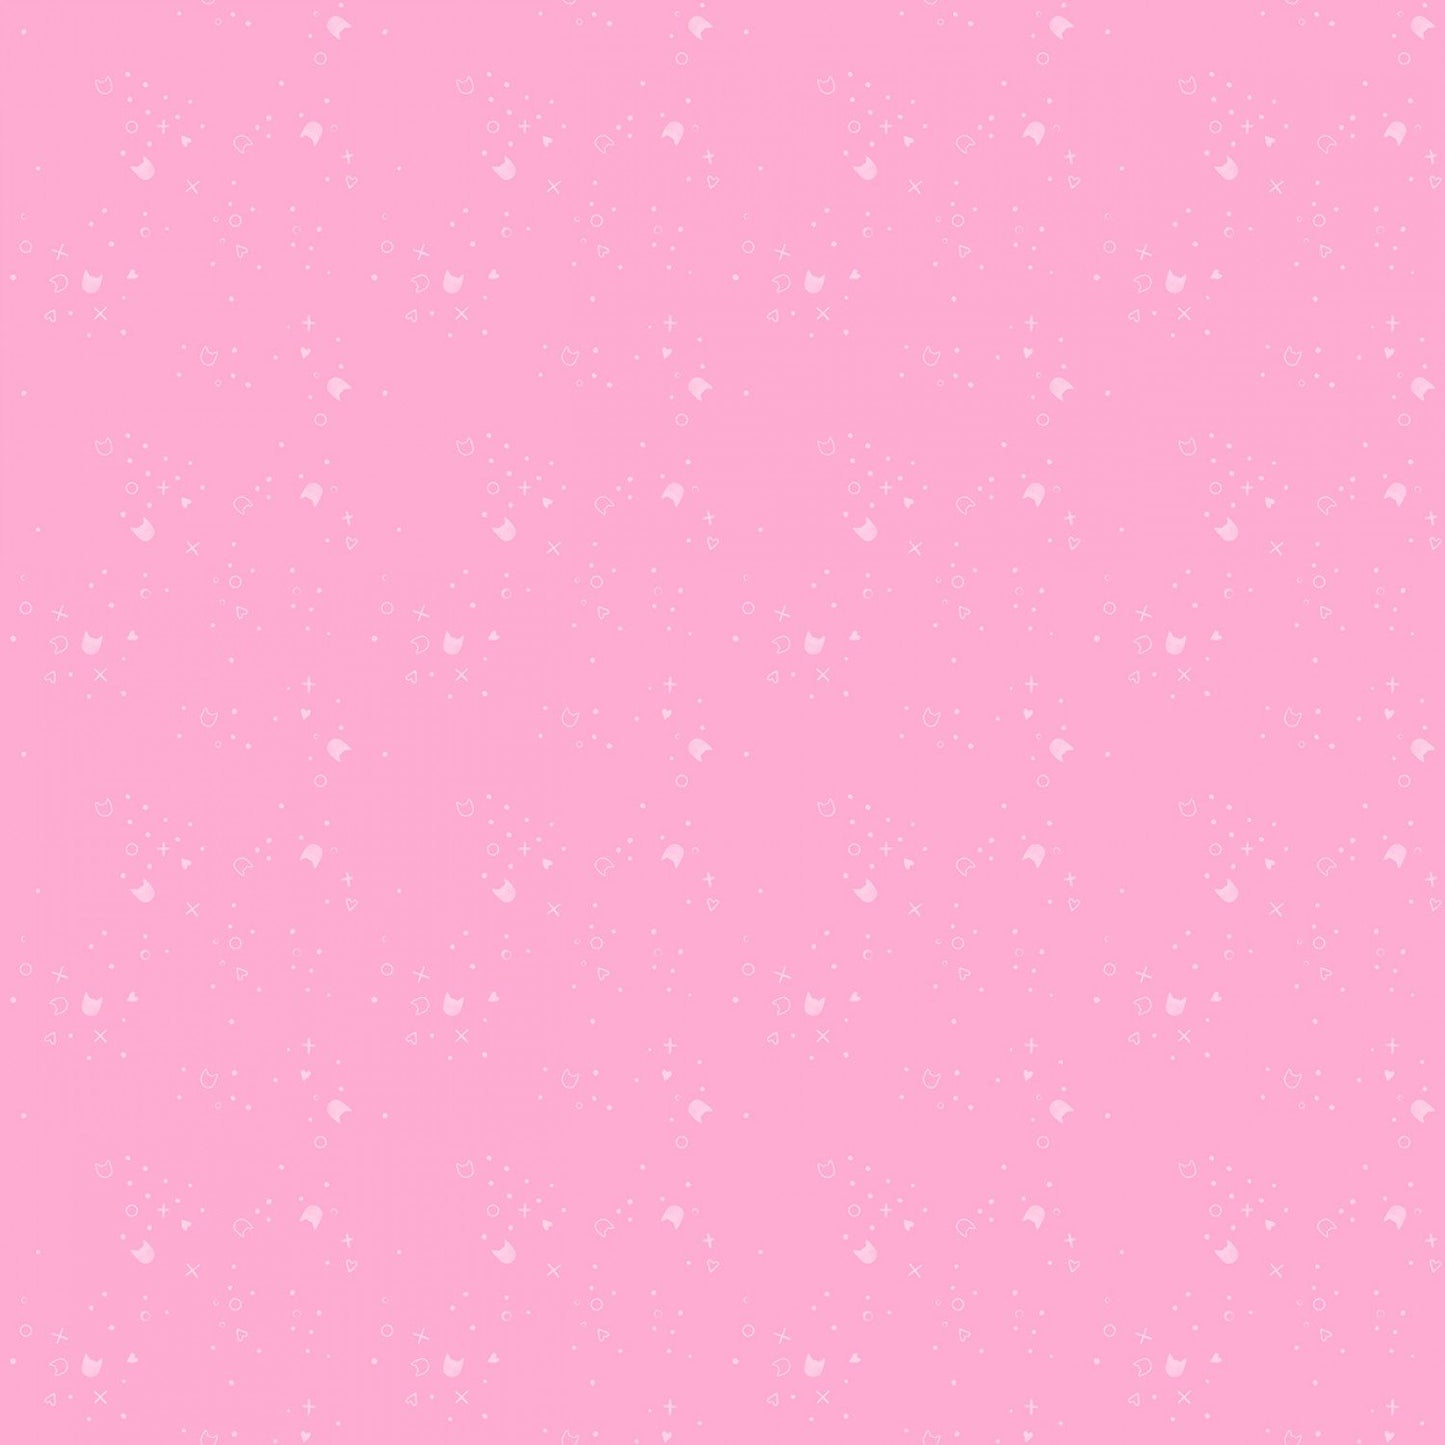 Pink fabric with white specks DPJ3000 Bubblegum pink cotton fabric